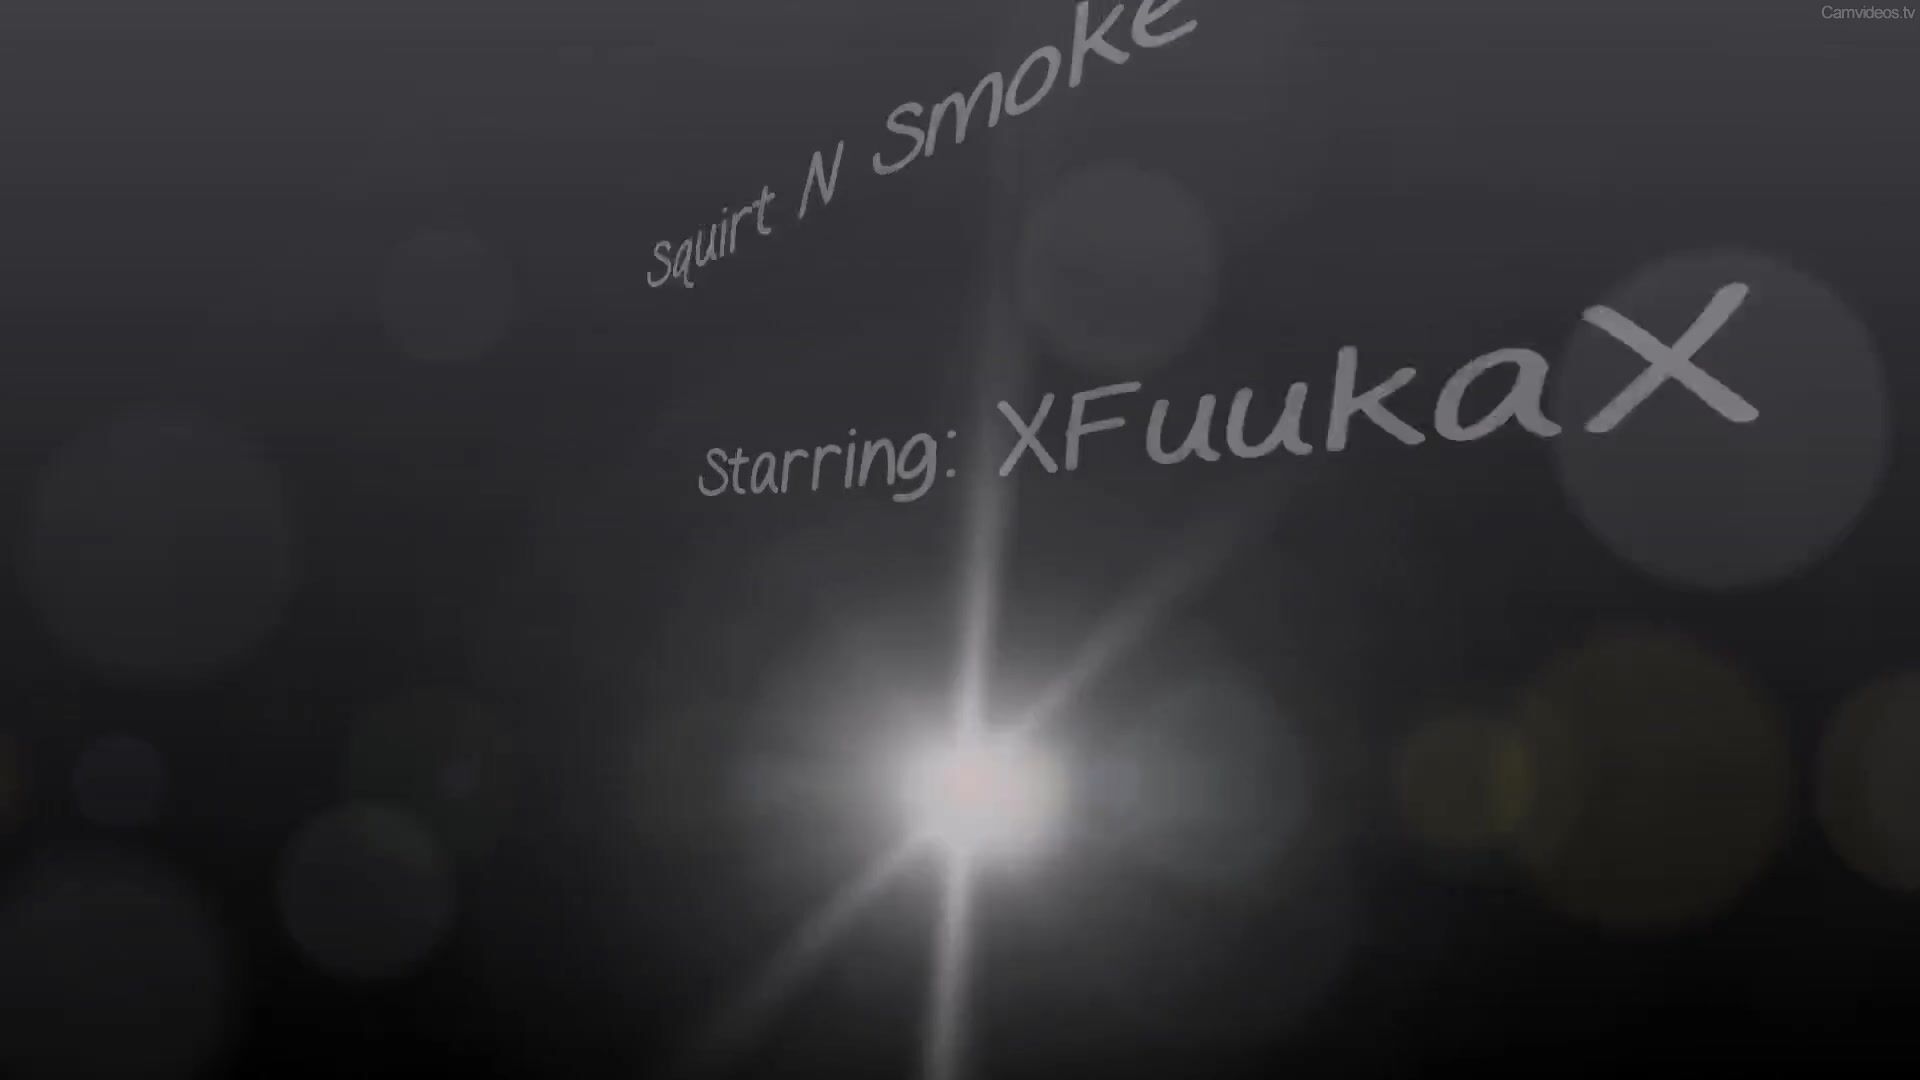 Xfuukax Squirt N Smoke On Camstreams Tv